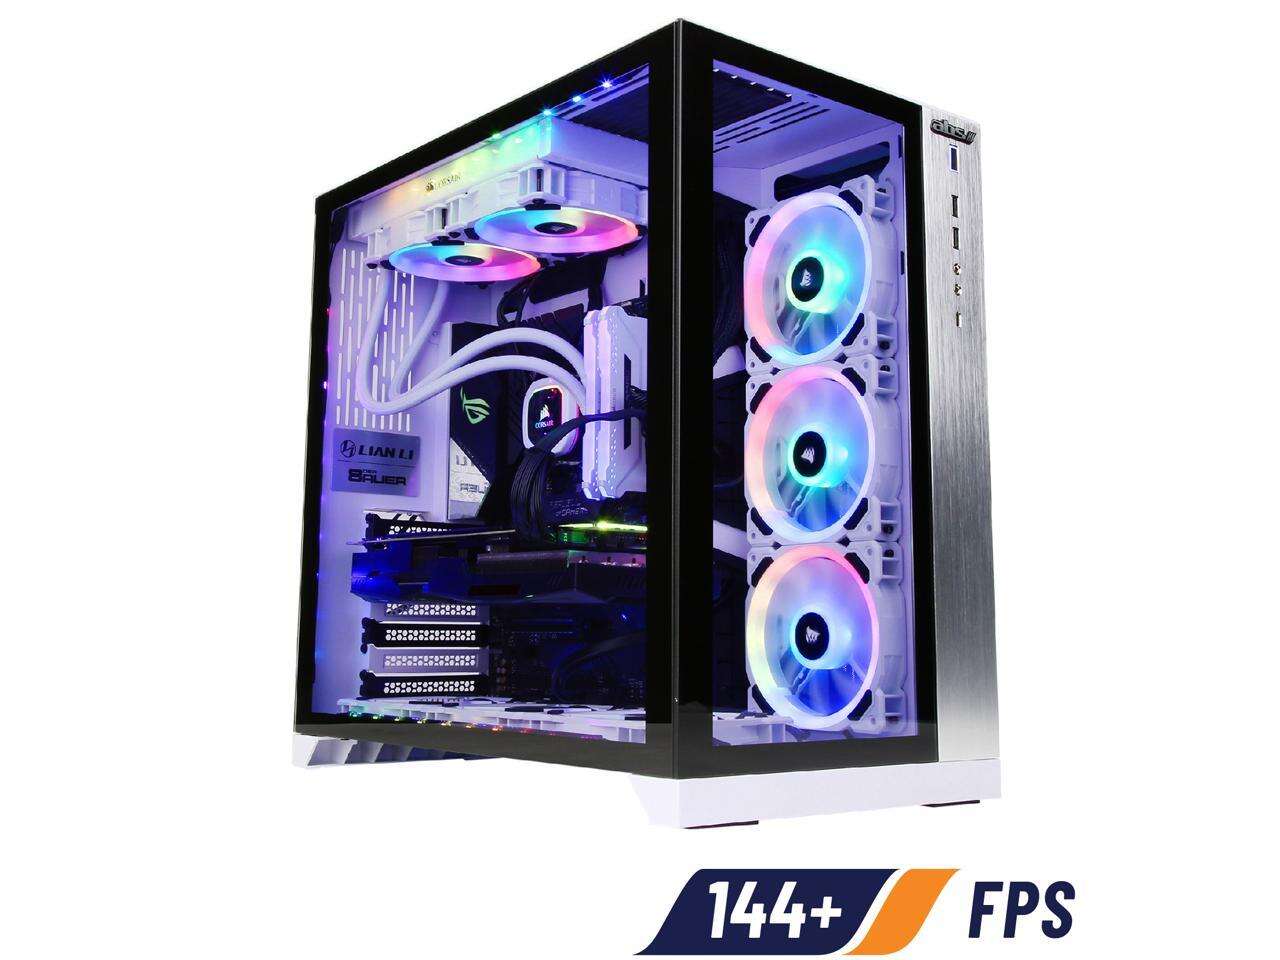 ABS Knight - Intel i7-9700K - Strix GeForce RTX 2070 Super - 16GB DDR4 3200MHz - 1TB SSD - Liquid Cooling (240mm) - Gaming Desktop PC - White